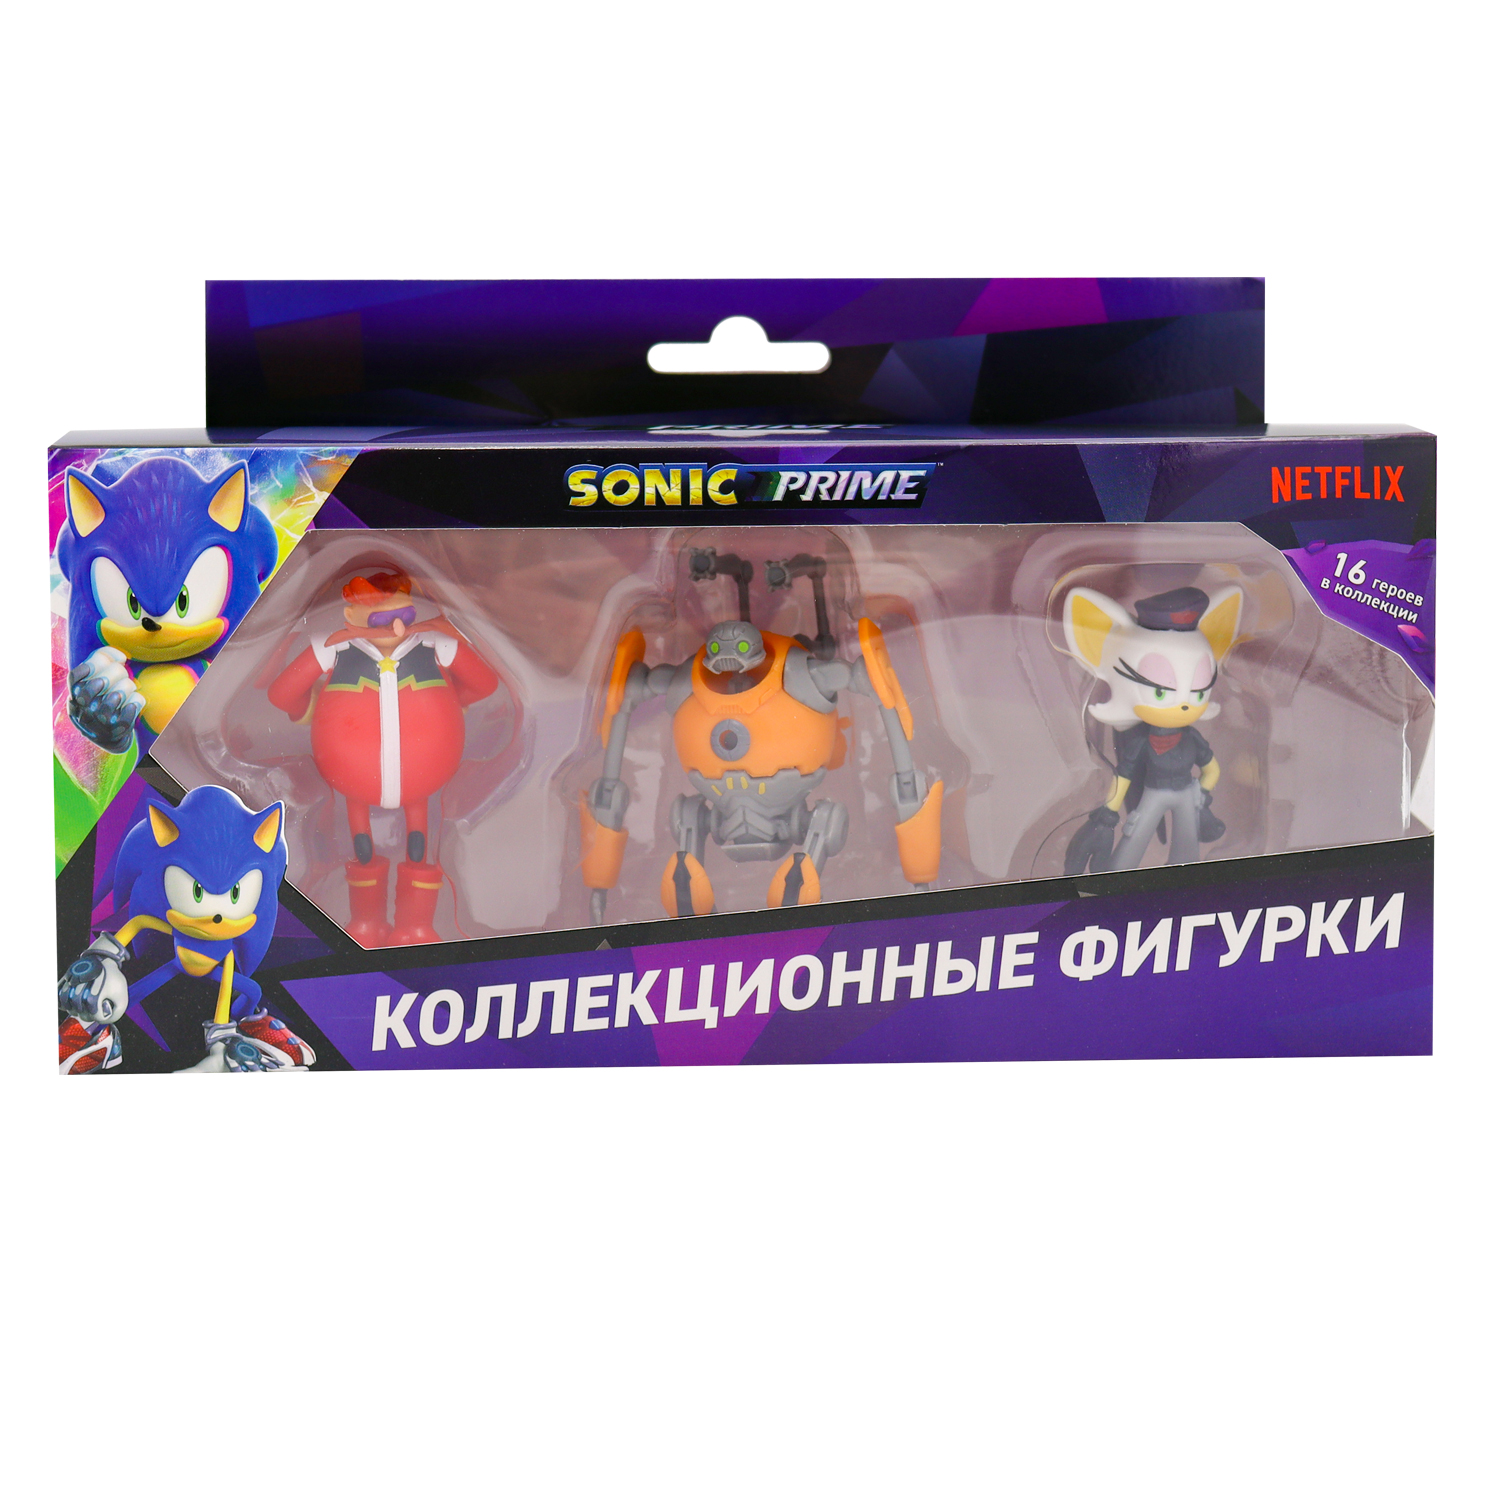 Набор игровой PMI Sonic Prime фигурки 3 шт SON2021-D - фото 5